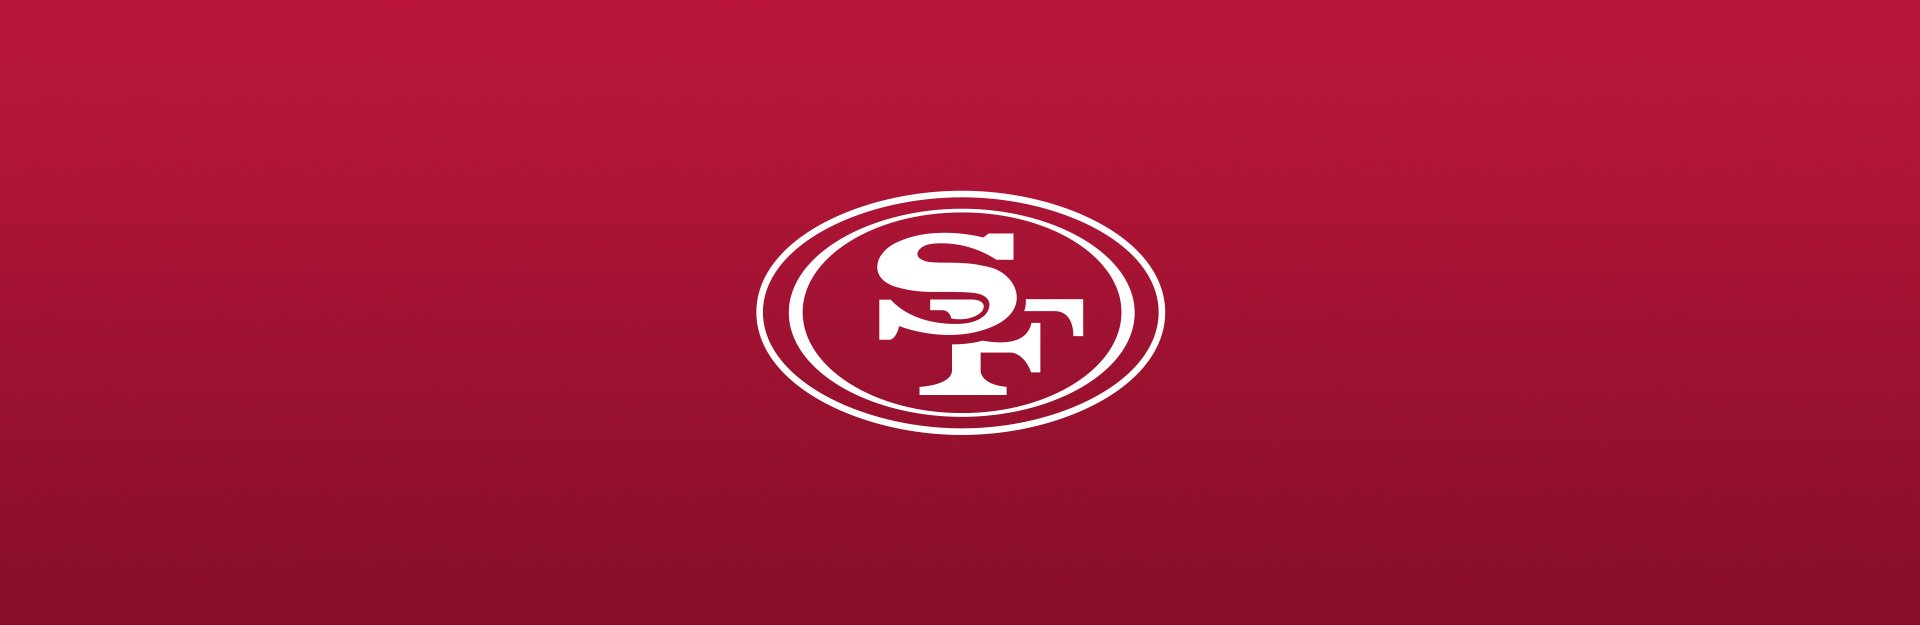 San Francisco 49ers, logo overlaid on red background